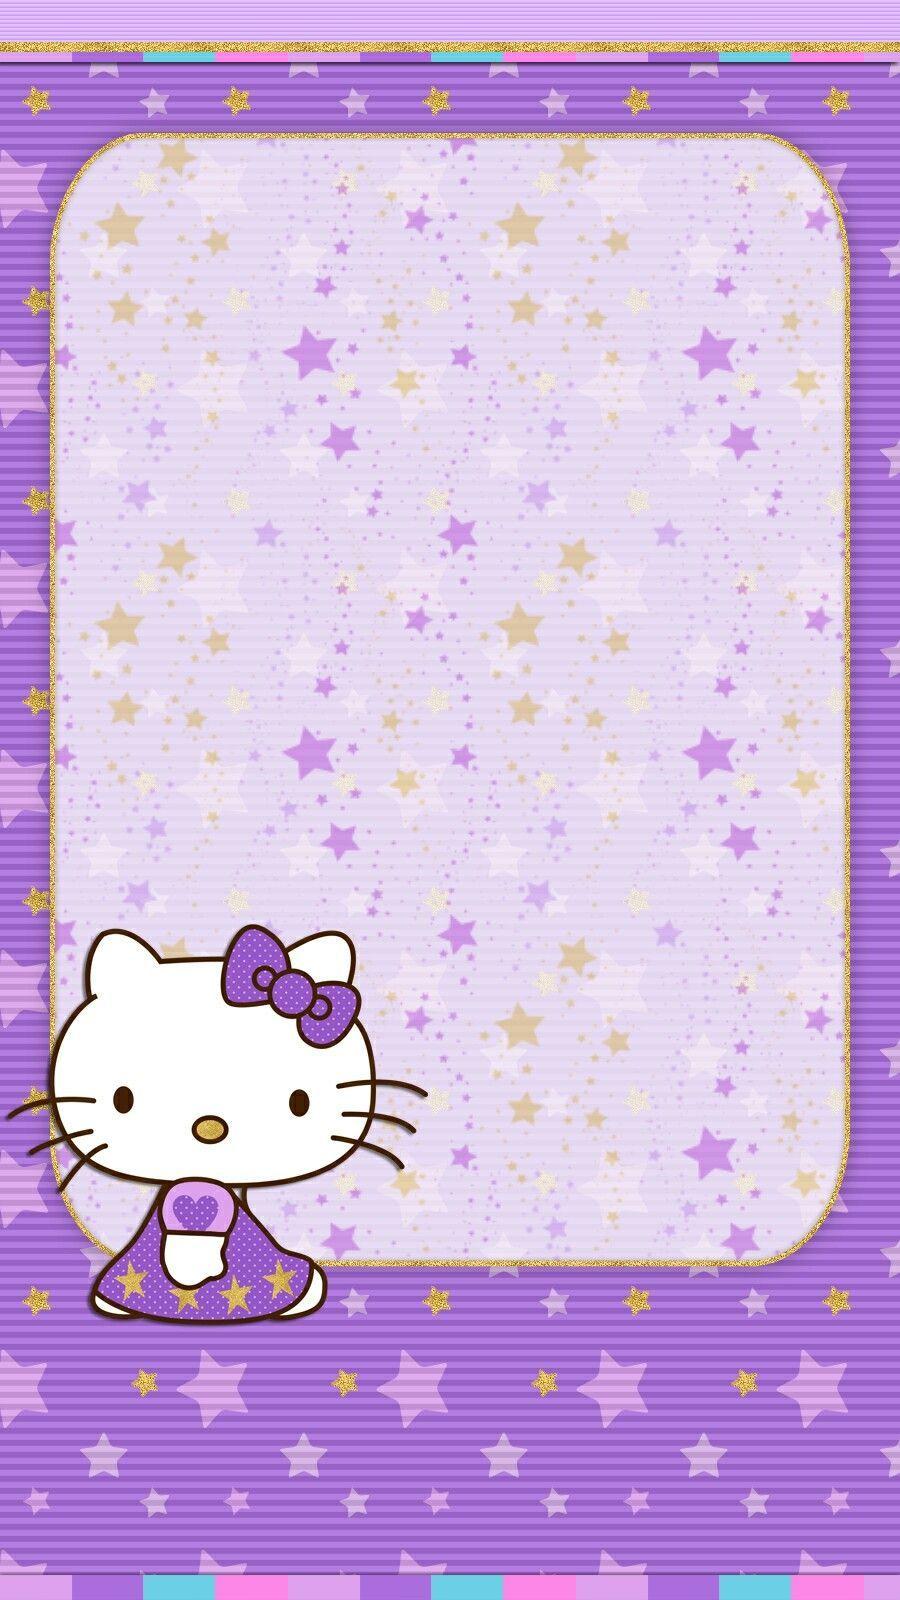 Hk wallpaper iphone. Hello Kitty. Wallpaper, Hello